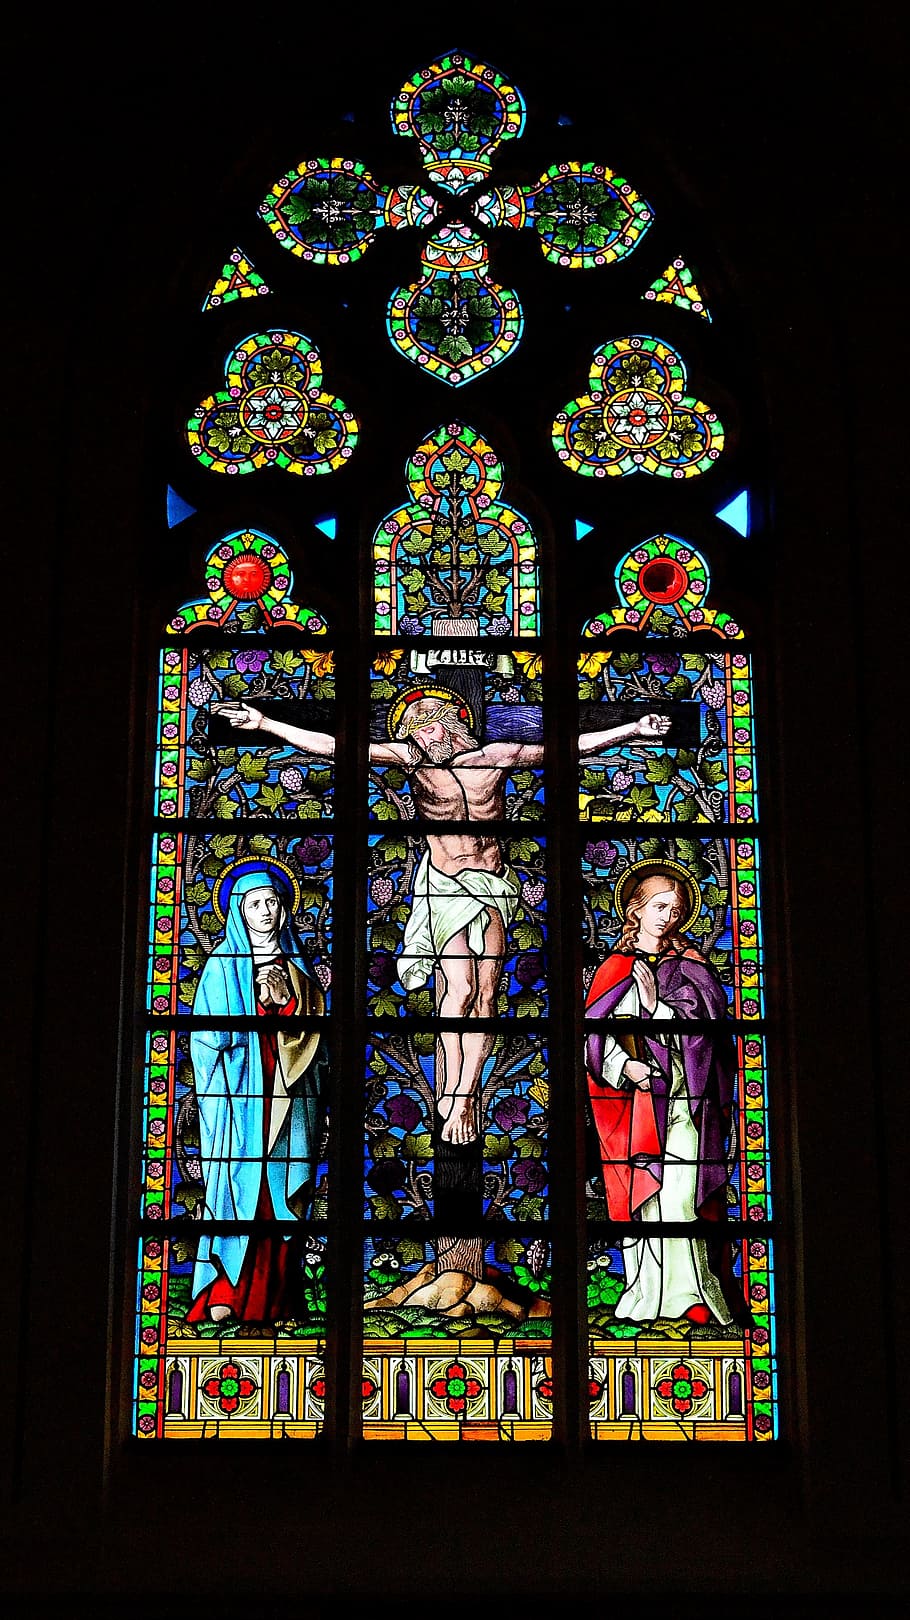 ventana de la iglesia, crucifixión, vidriera, fe, iglesia, cristiana, inri, jesús, biblia, representación humana